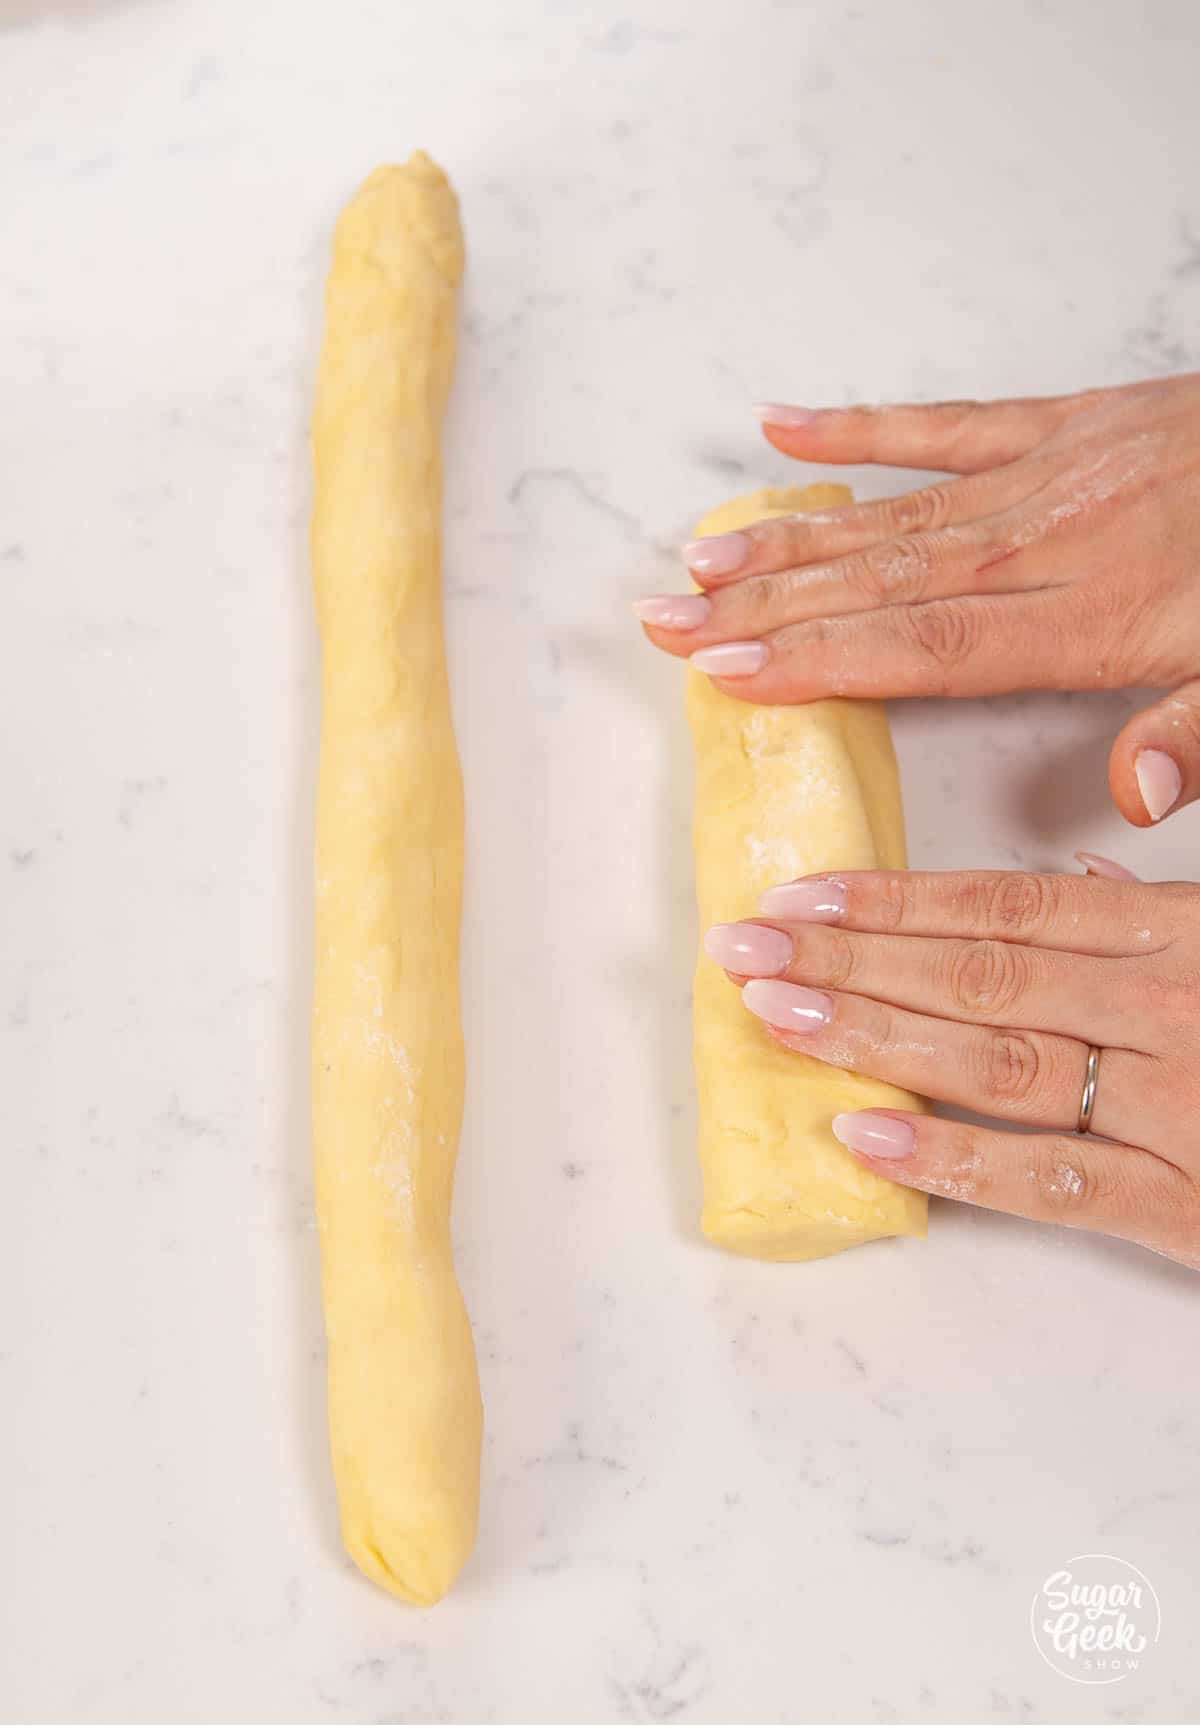 rolling brioche dough into long strands